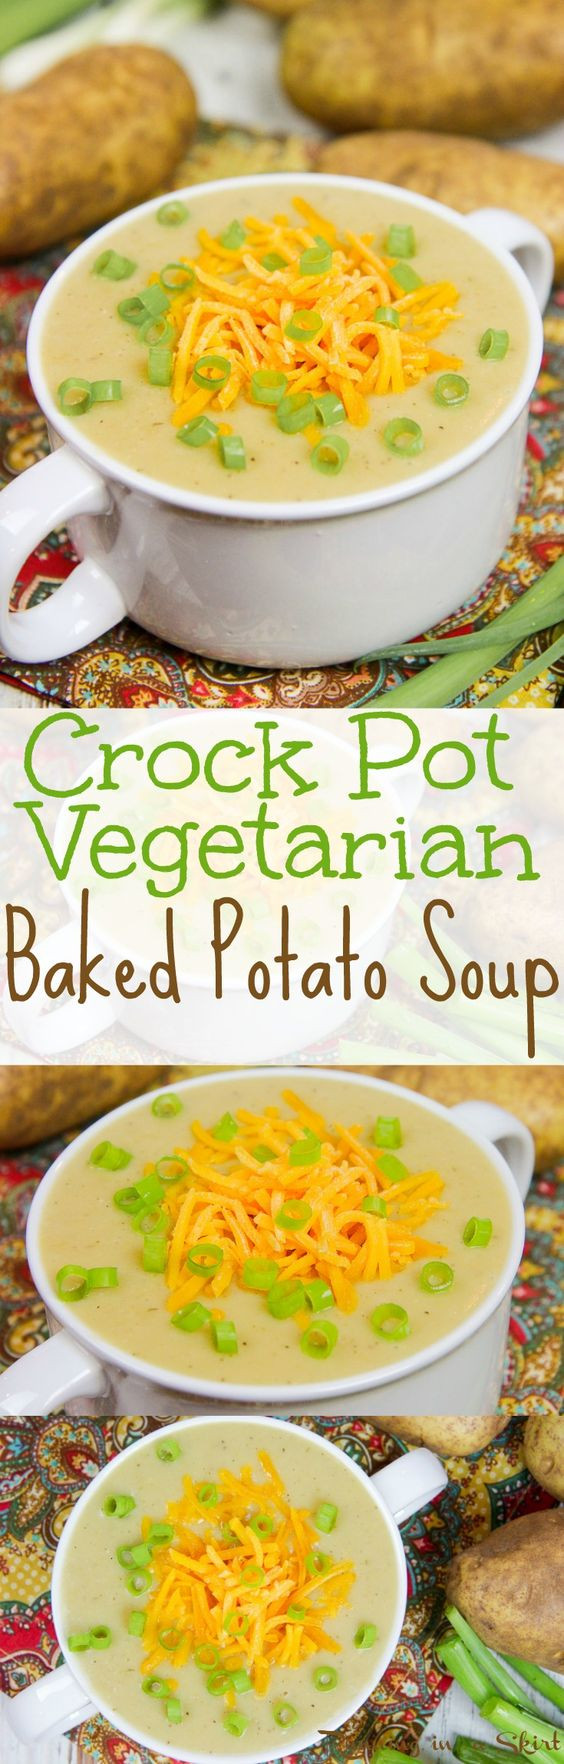 Crockpot Potato Soup Healthy
 Healthy Ve arian Crock Pot Baked Potato Soup recipe A